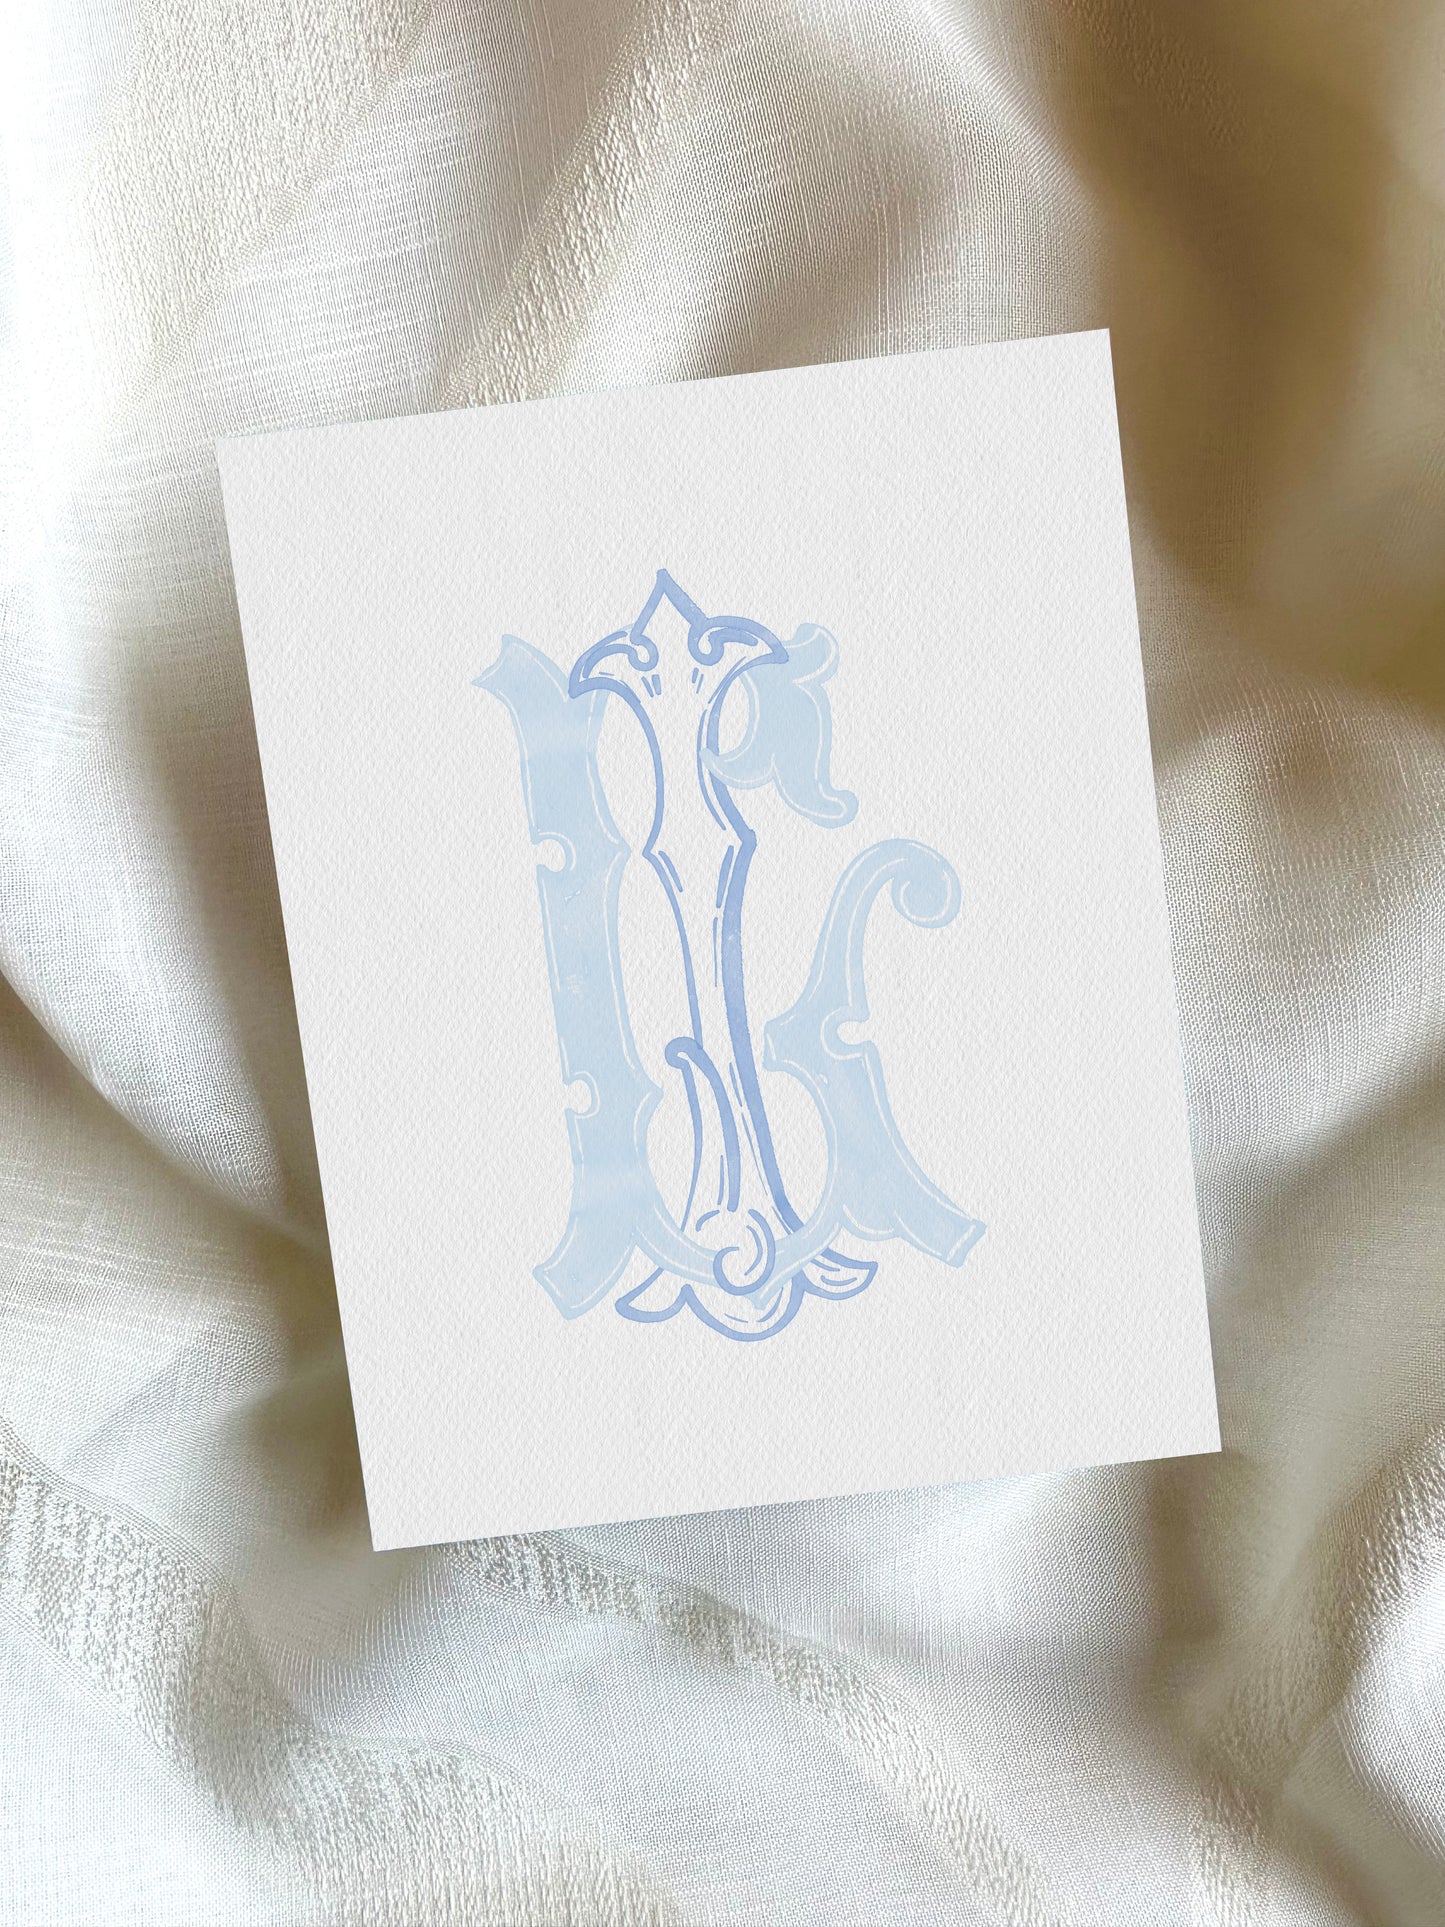 2 Letter Monogram with Letters GI IG | Digital Download - Wedding Monogram SVG, Personal Logo, Wedding Logo for Wedding Invitations The Wedding Crest Lab